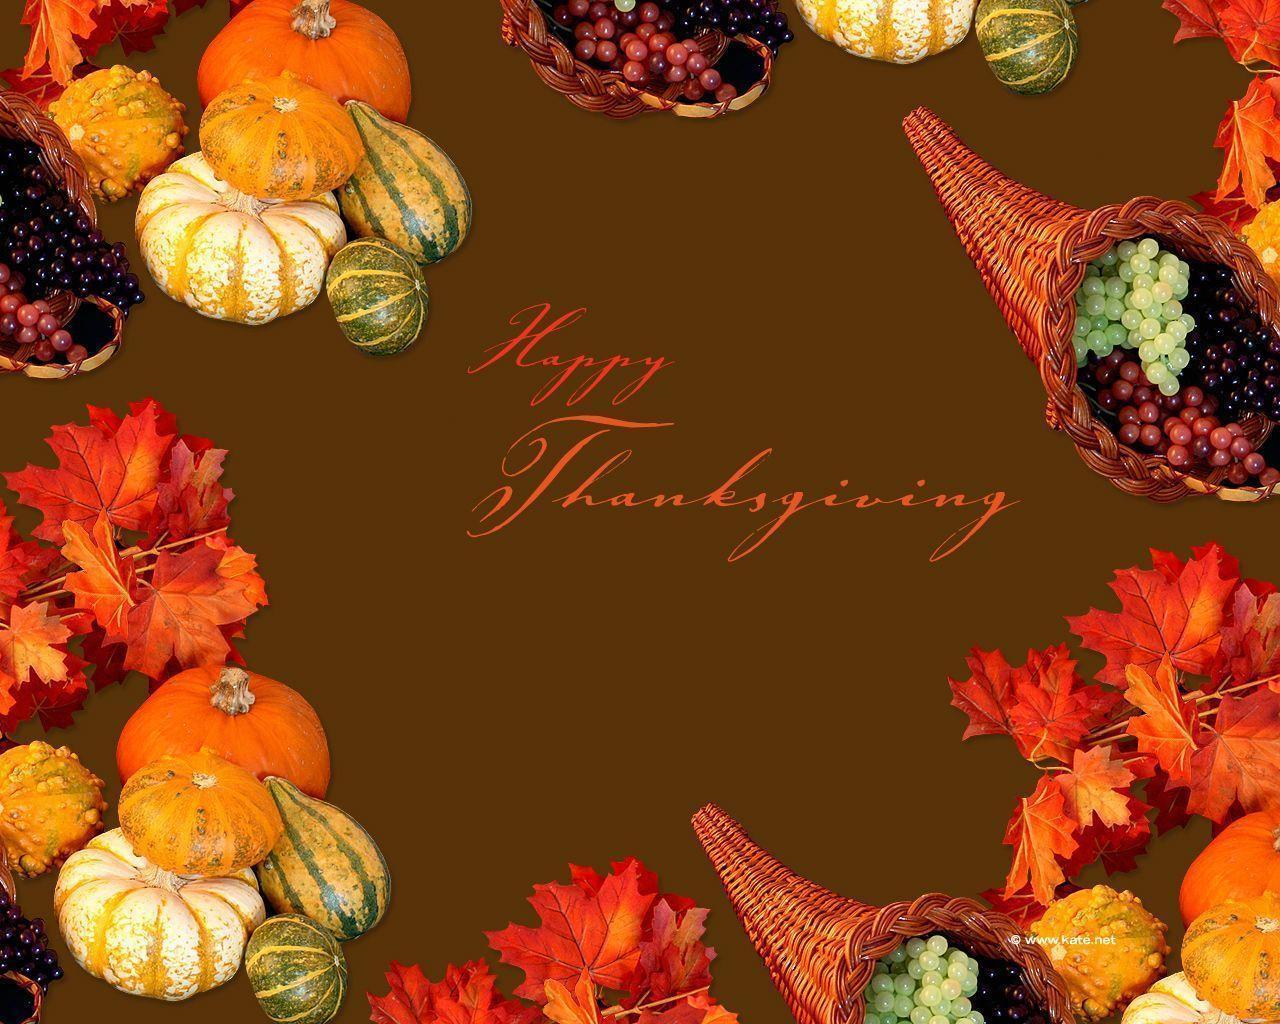 Thanksgiving Wallpaper & Background (HD & Full Width). Happy